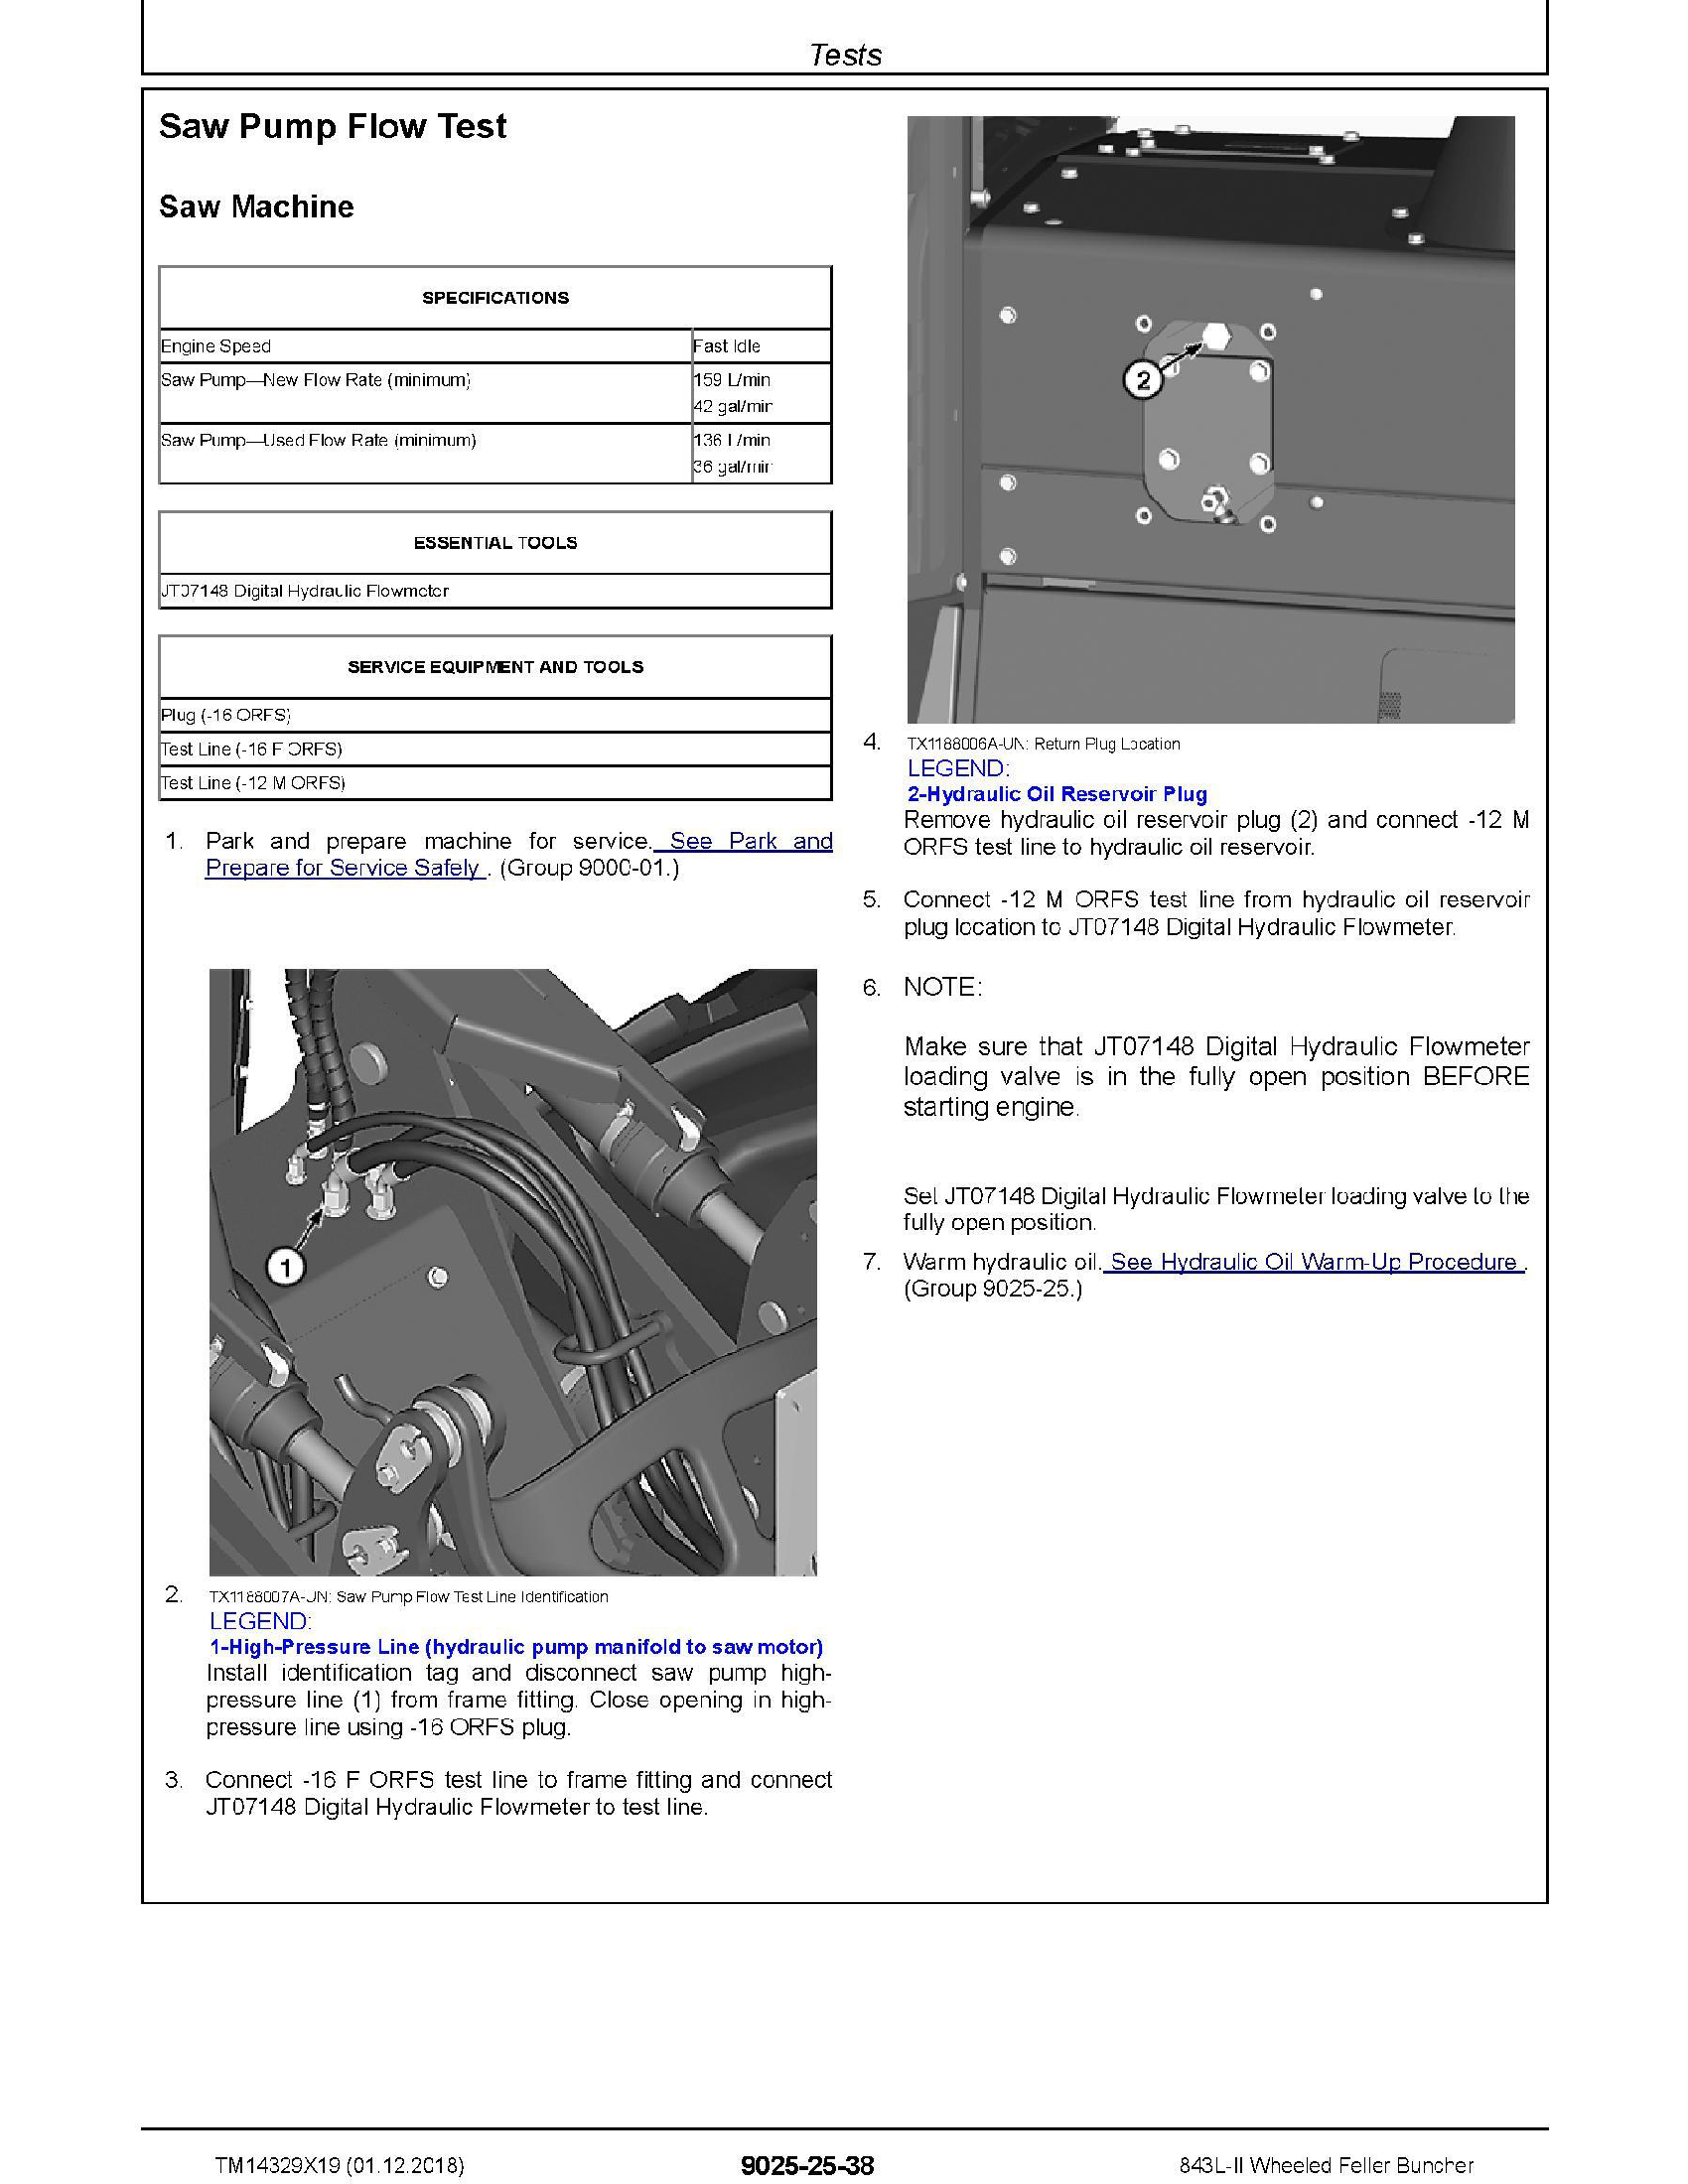 John Deere _F690815������� manual pdf